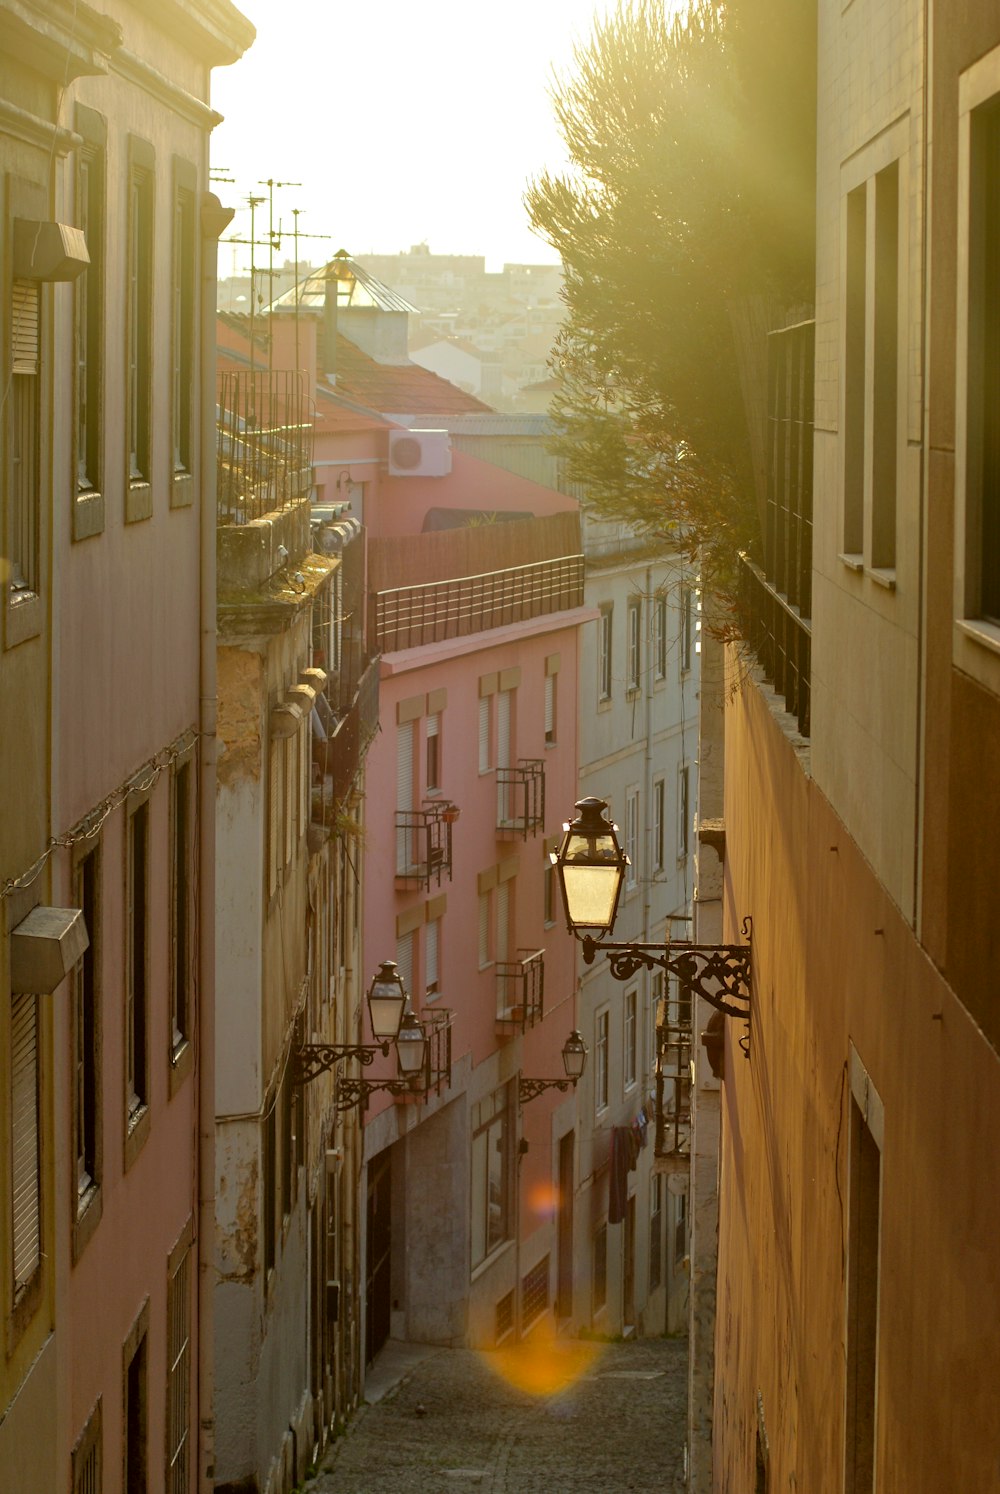 the sun is shining down on a narrow city street